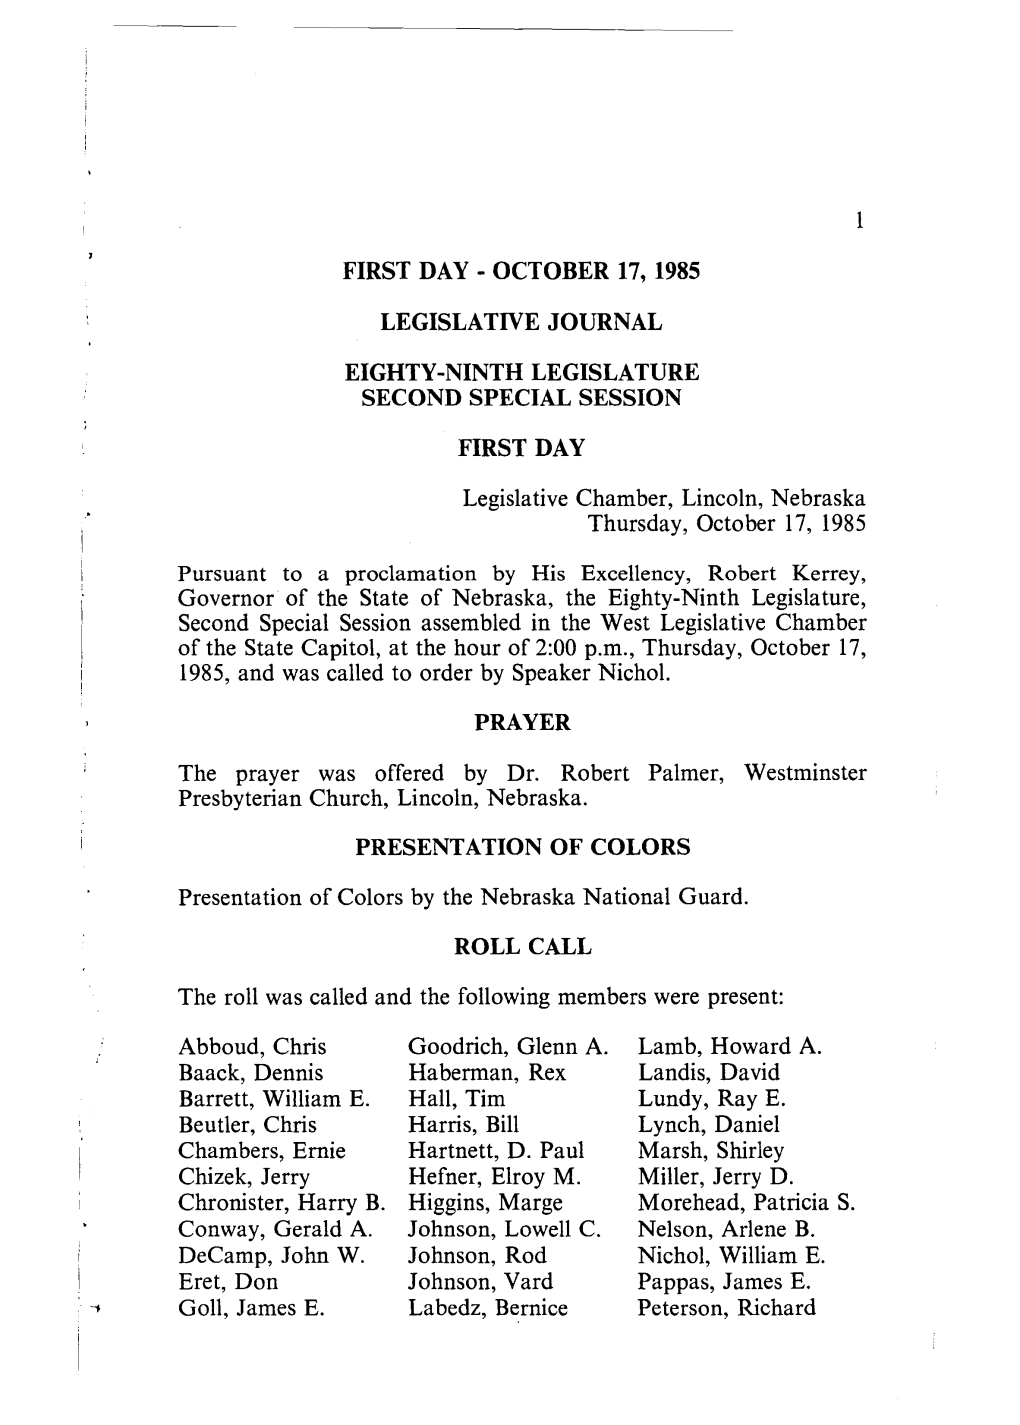 October 17, 1985 Legislative Journal Eighty-Ninth